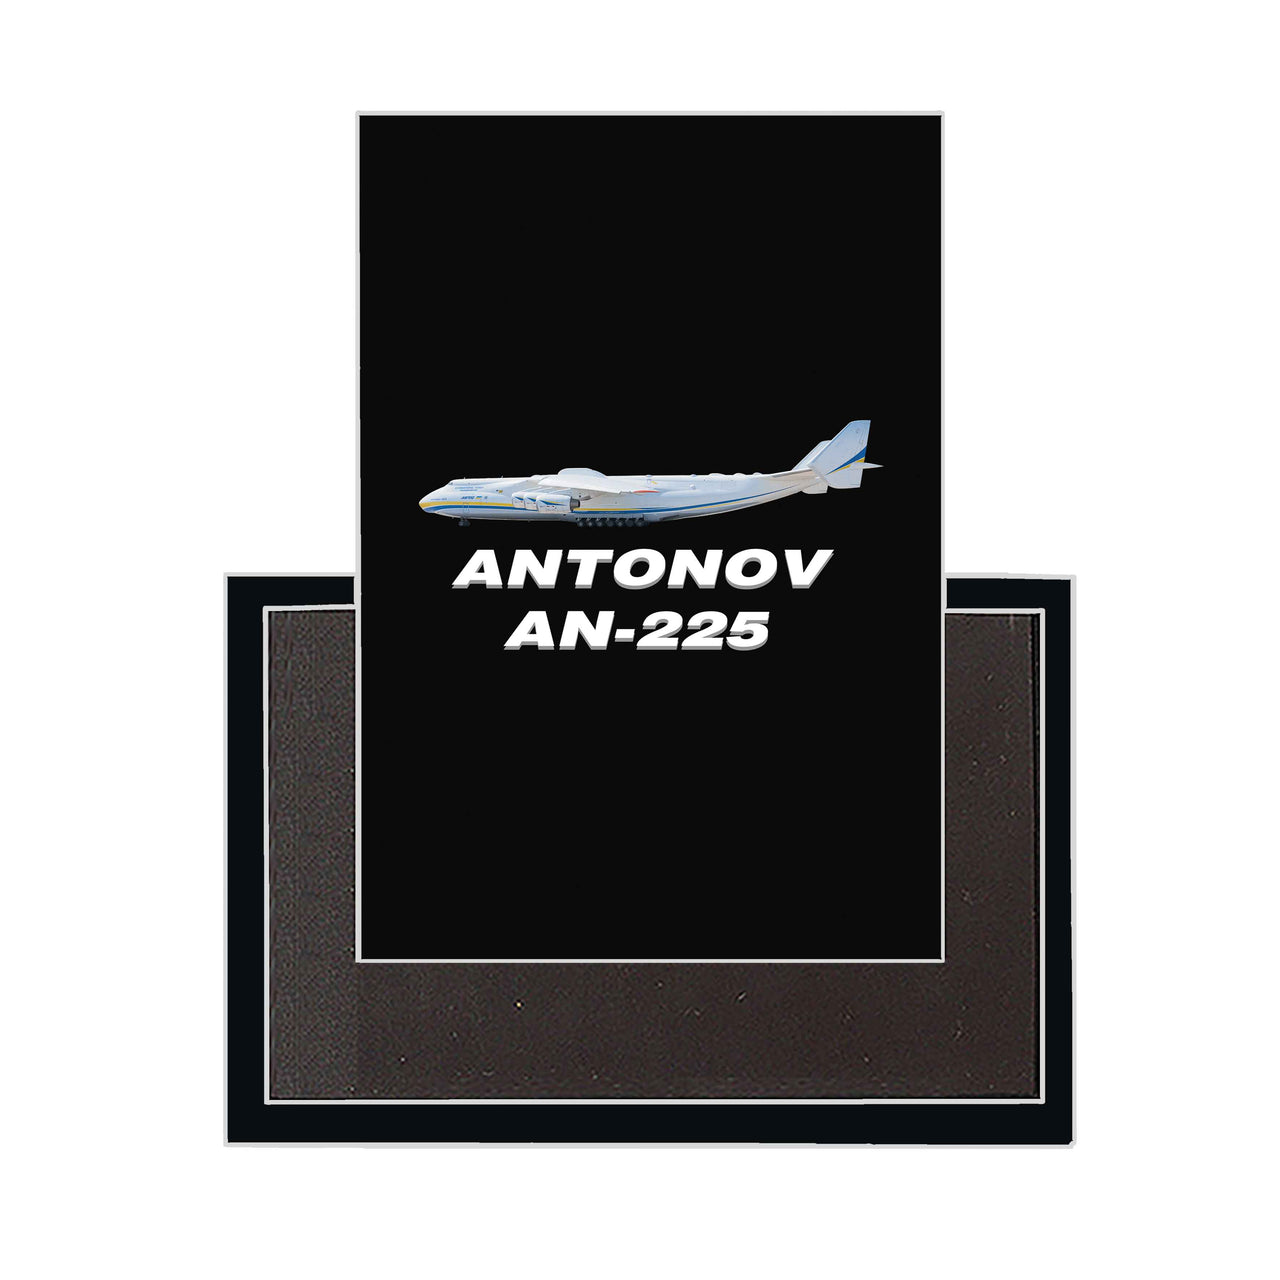 The Antonov AN-225 Designed Magnets